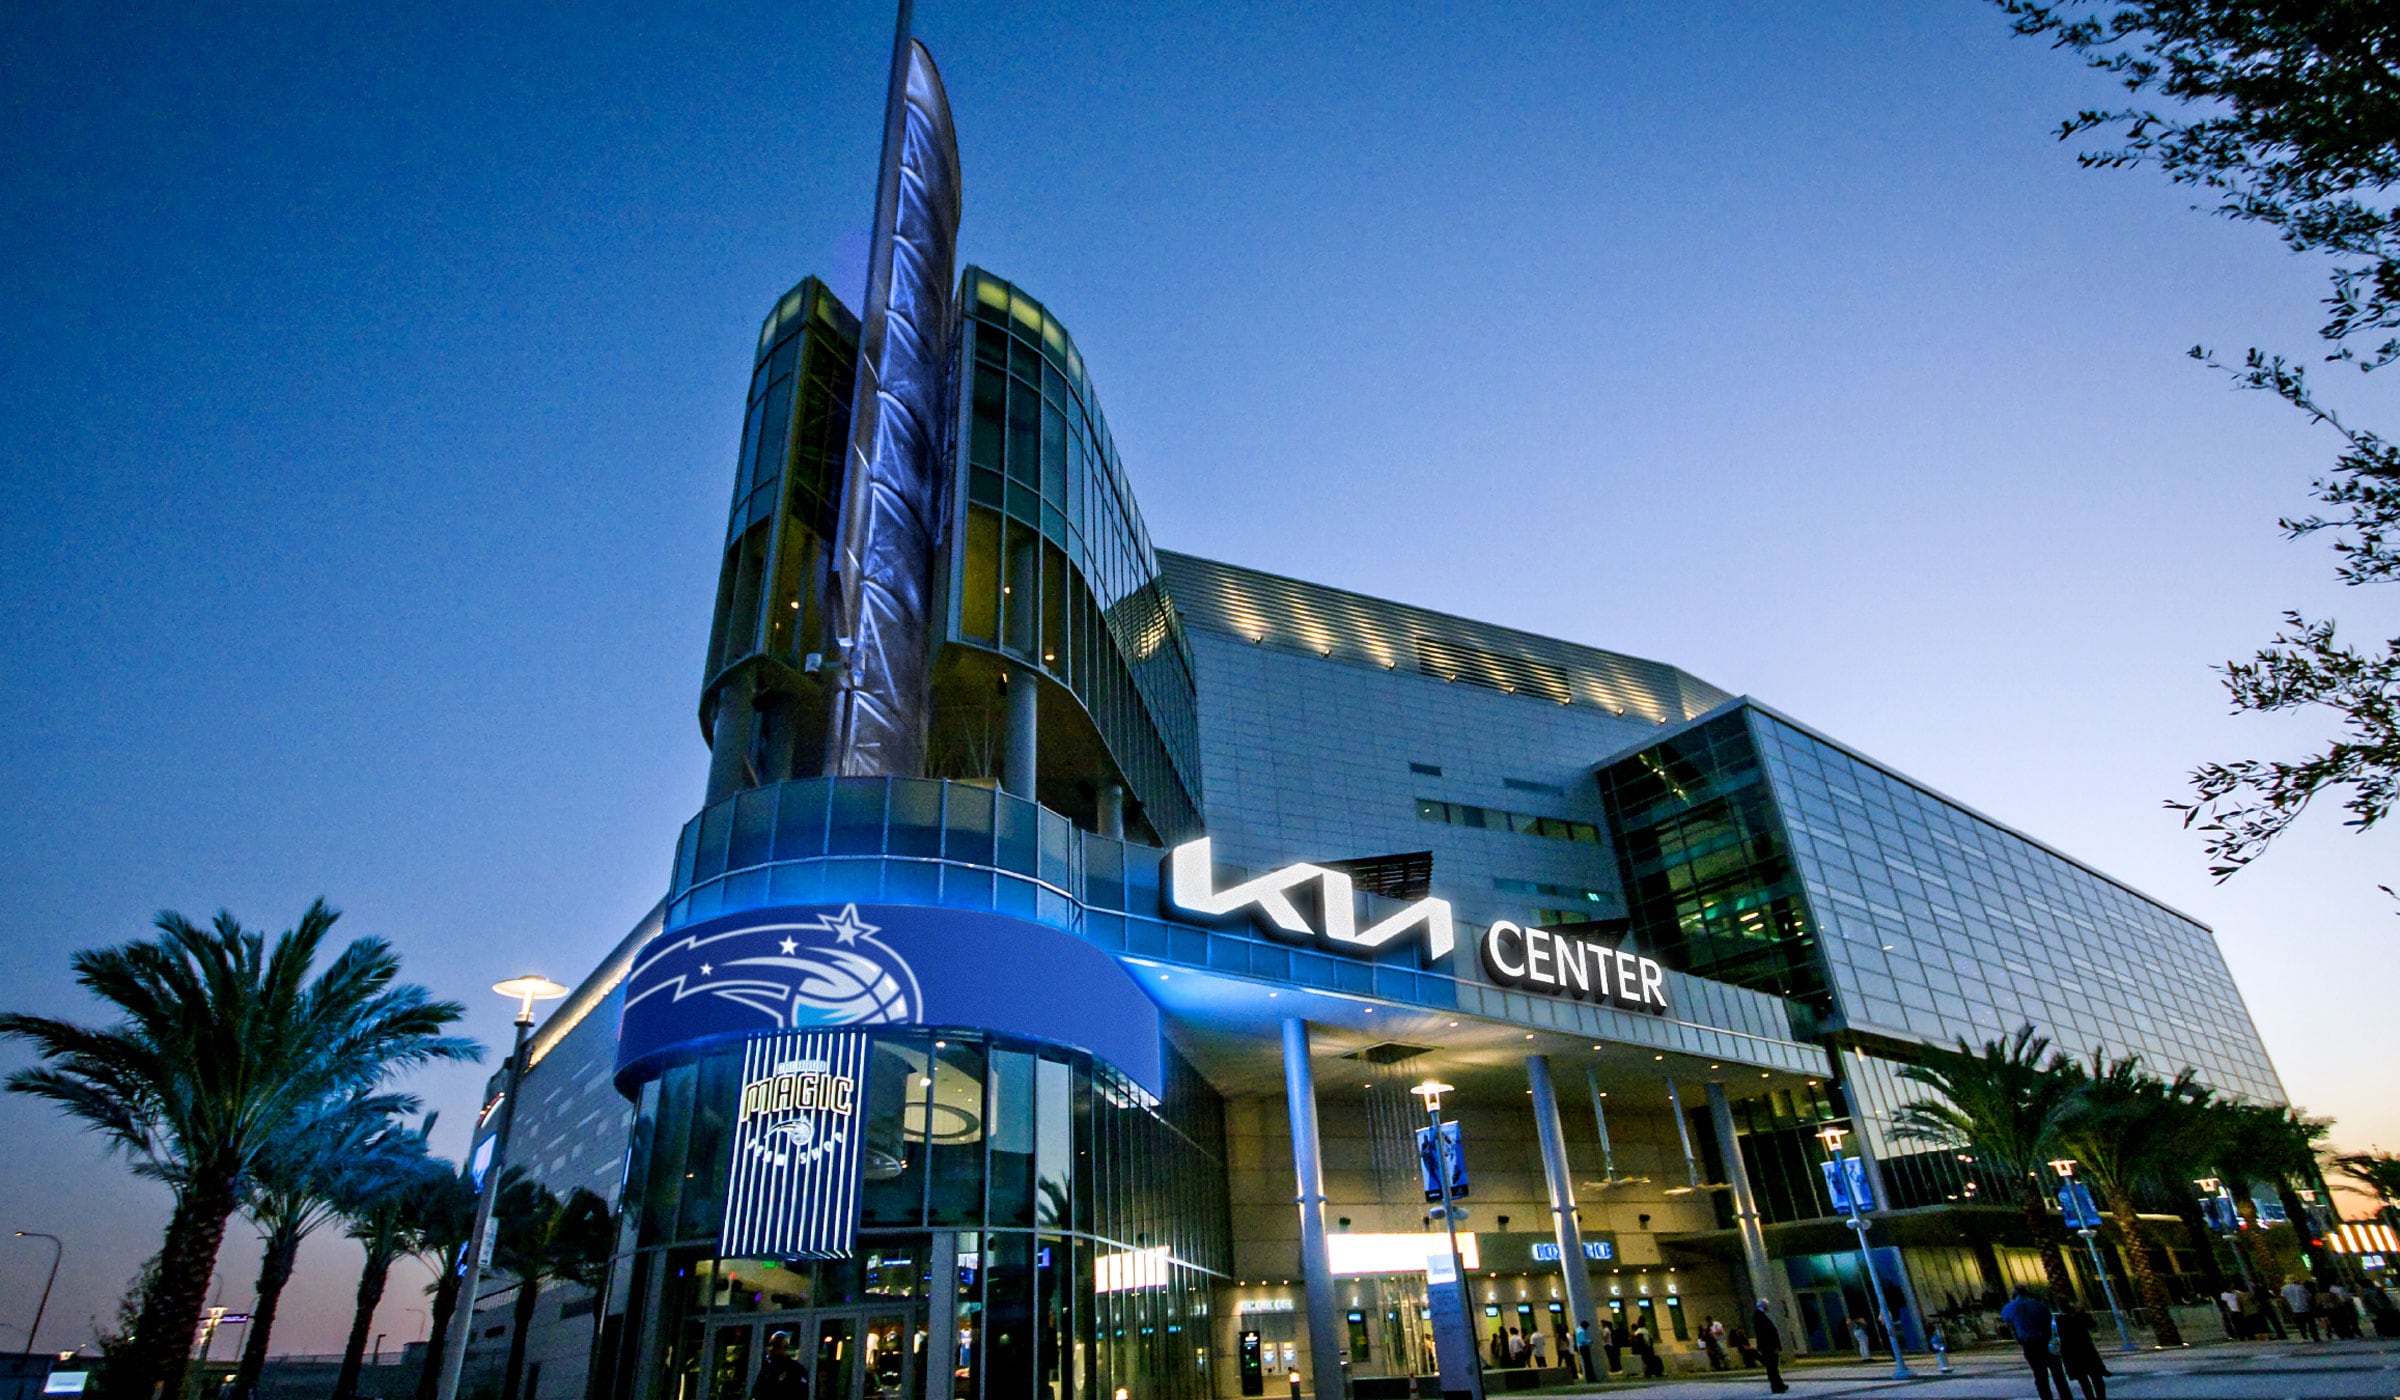 Orlando Magic's home ground renamed as Kia Center - iSportConnect